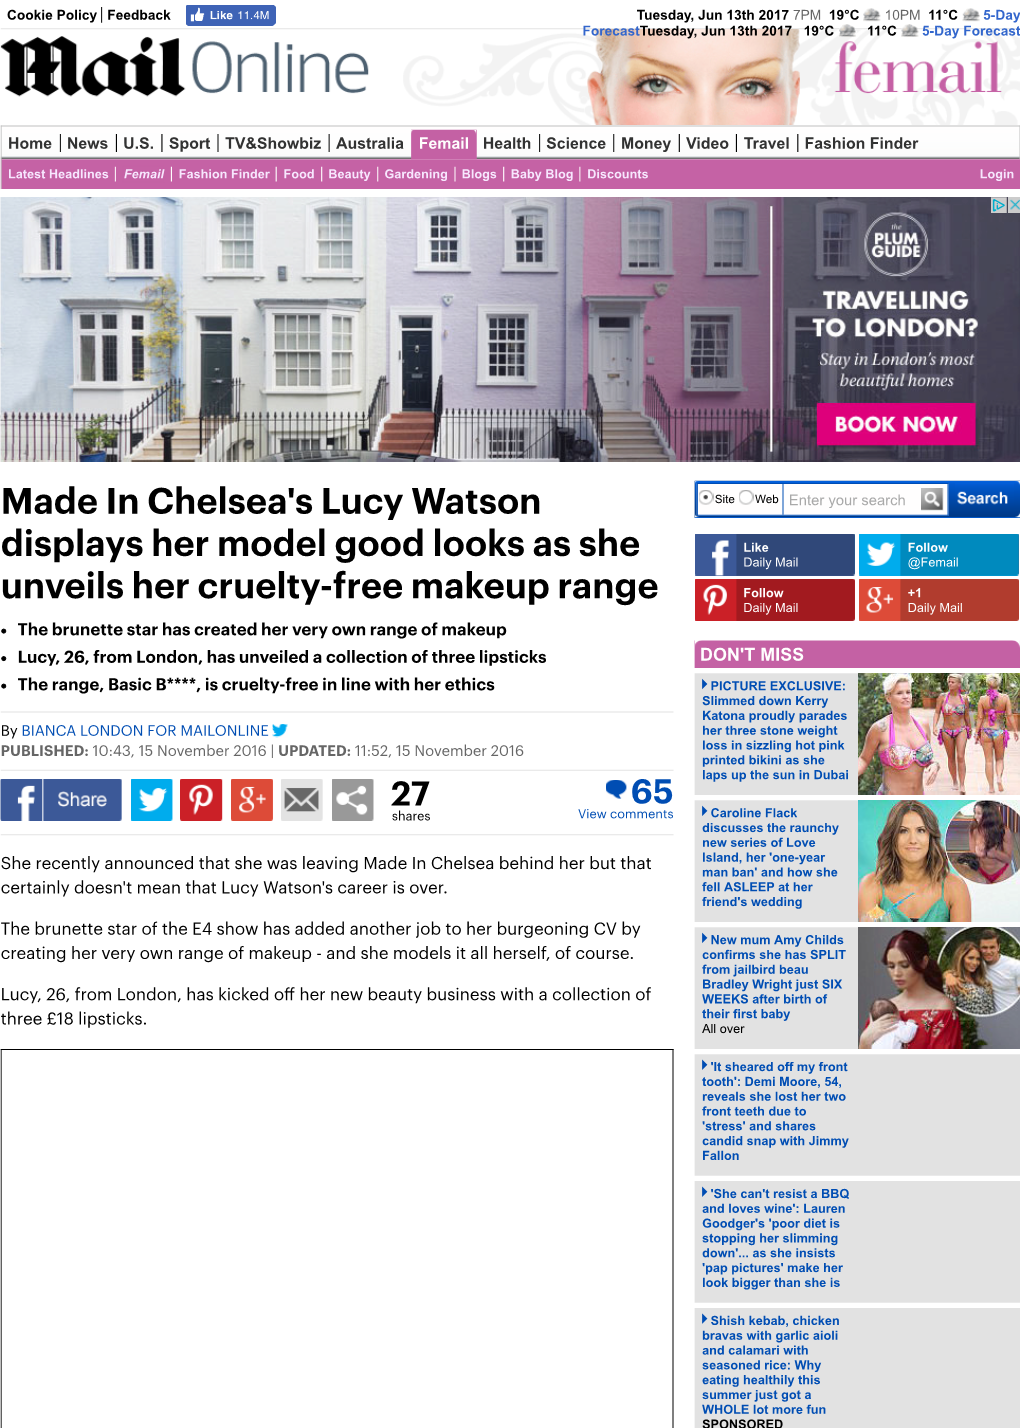 Made in Chelsea's Lucy Watson Unveils Her Cruelty-Free Makeup Range